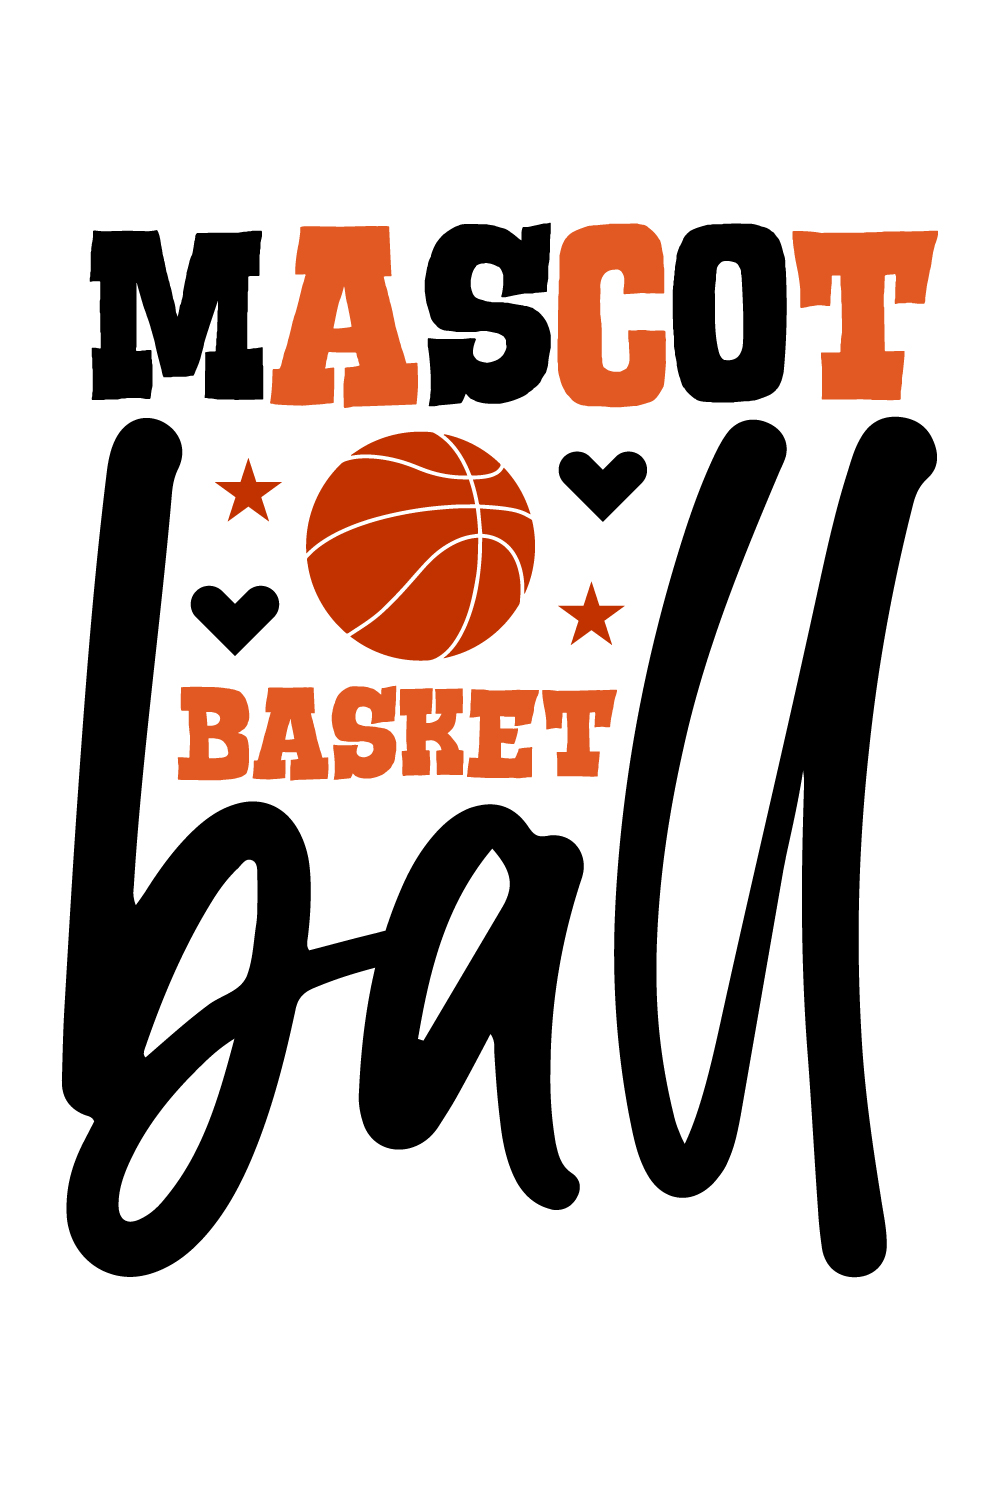 Mascot Basketball pinterest preview image.